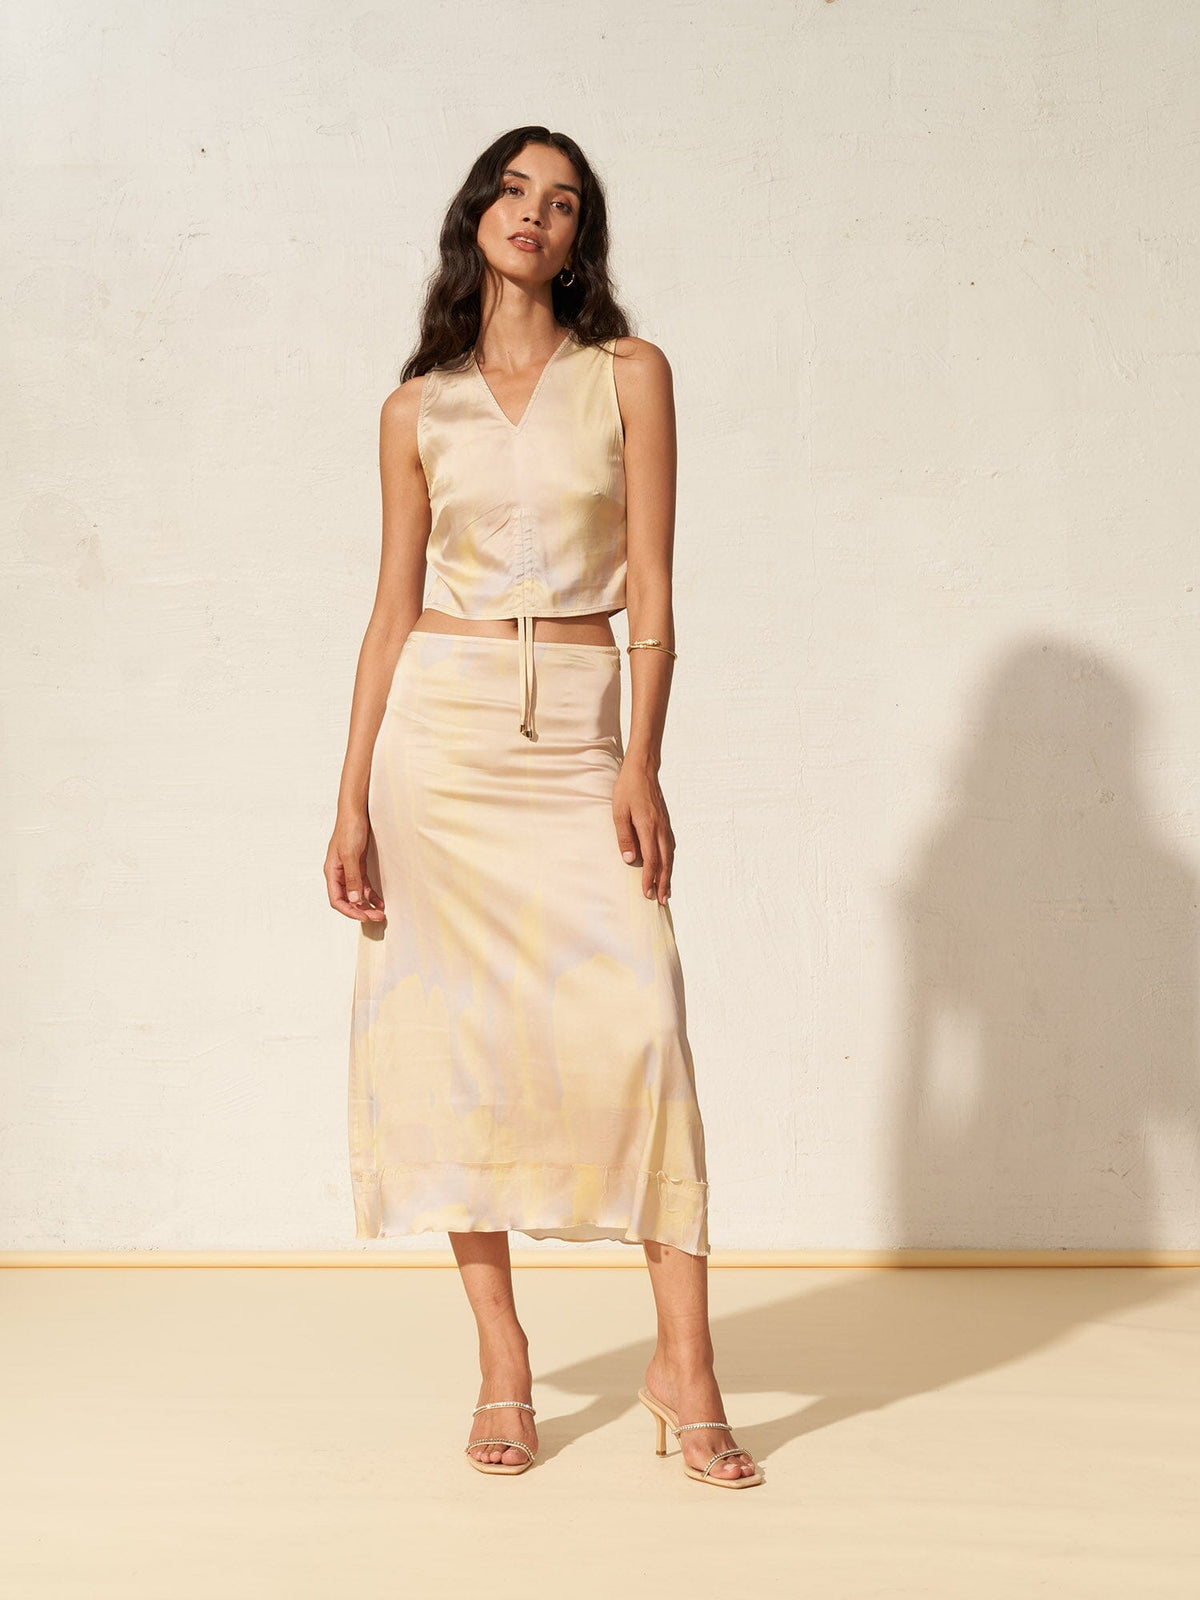 PRUNE - Flared midi skirt in viscose satin Tie & Dye print Yellow Skirt Fête Impériale